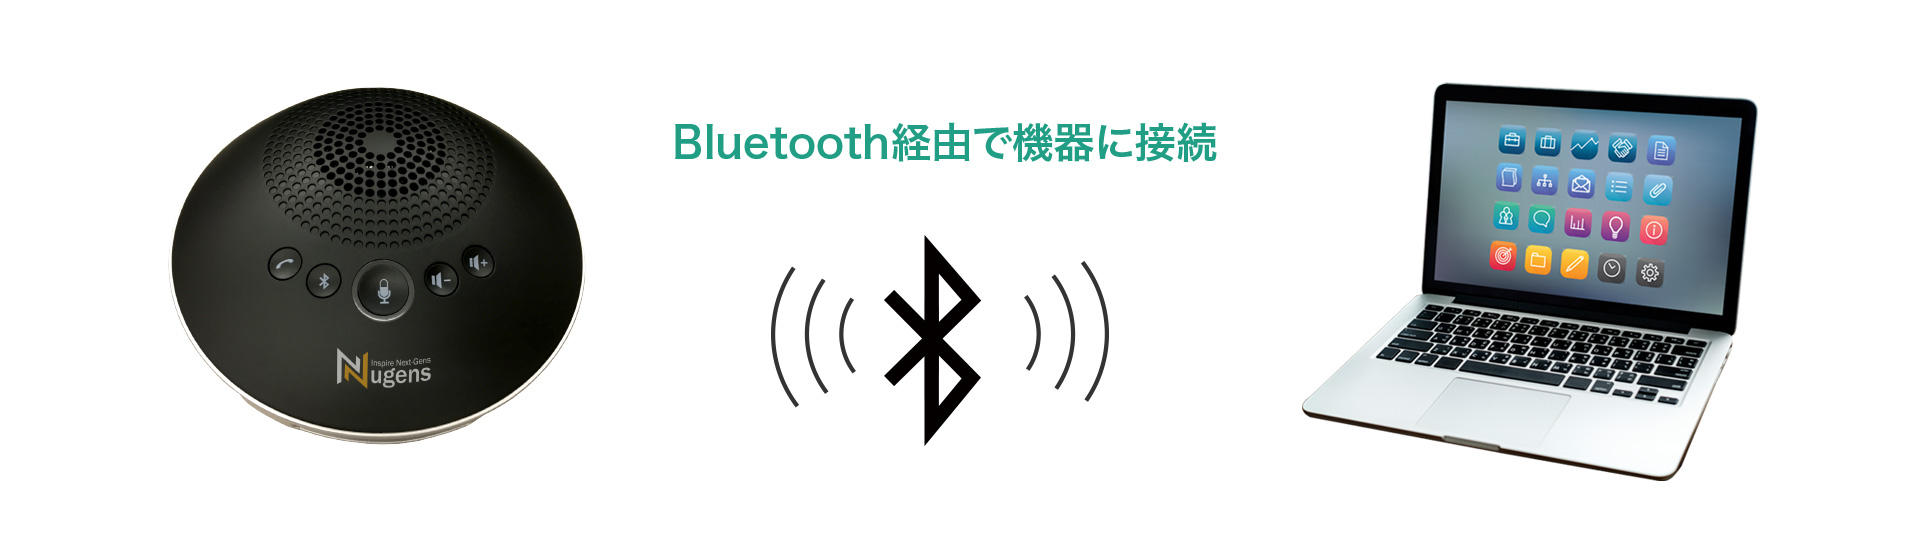 Bluetooth経由で機器に接続